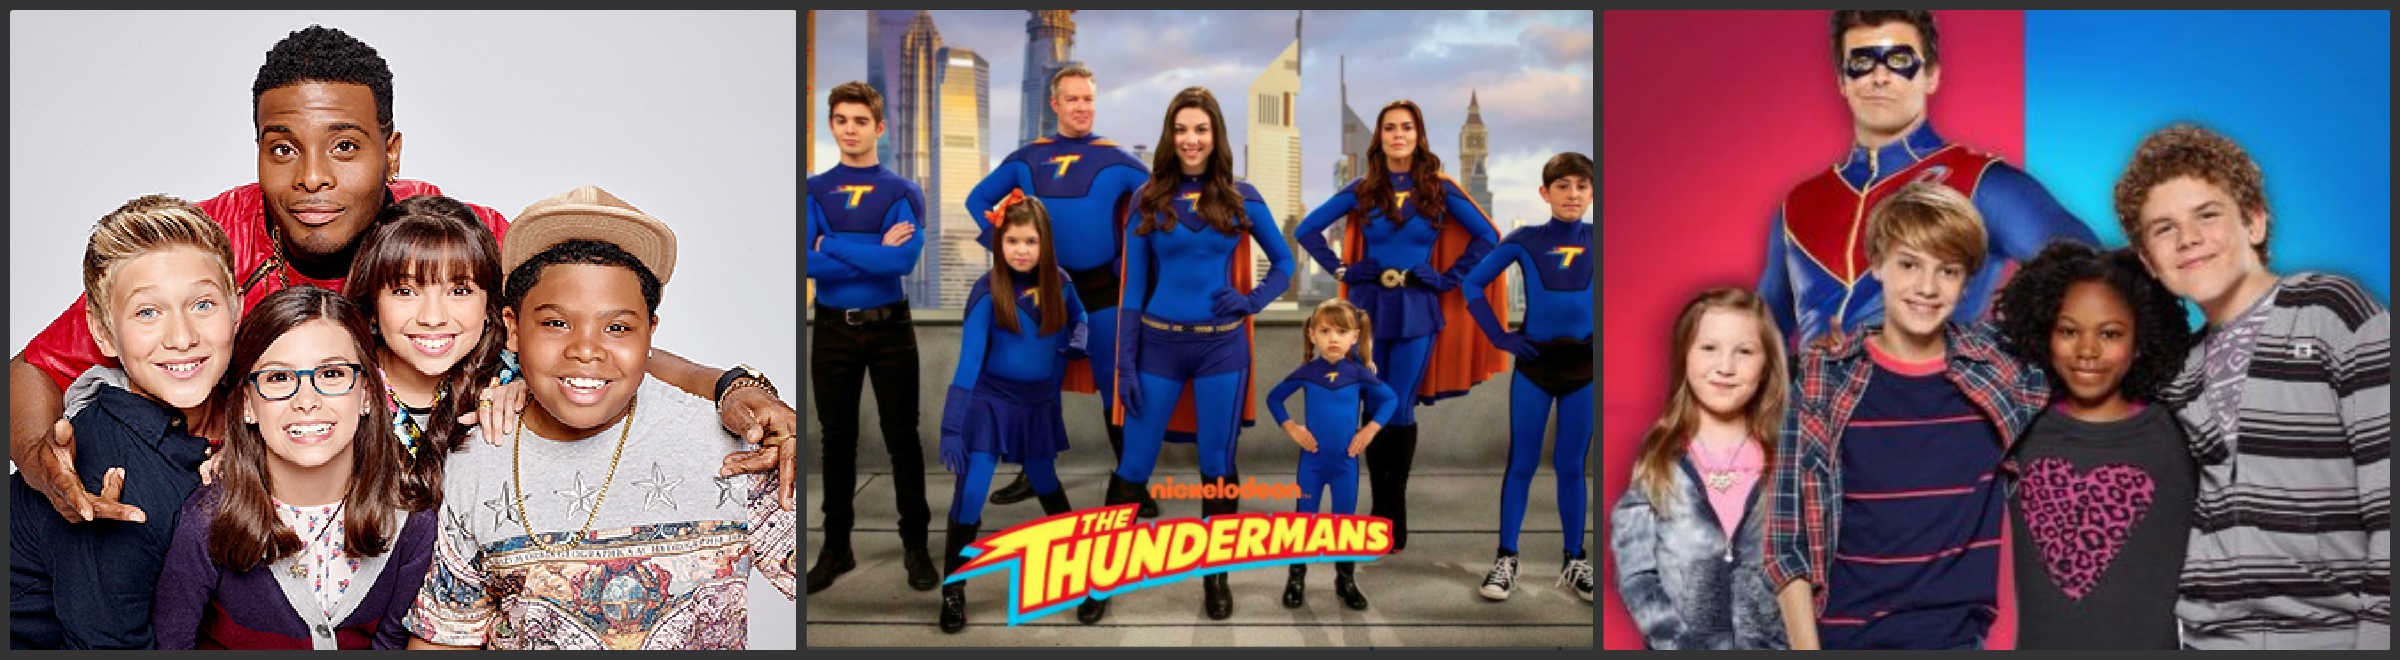 The Thundermans, Nickelodeon